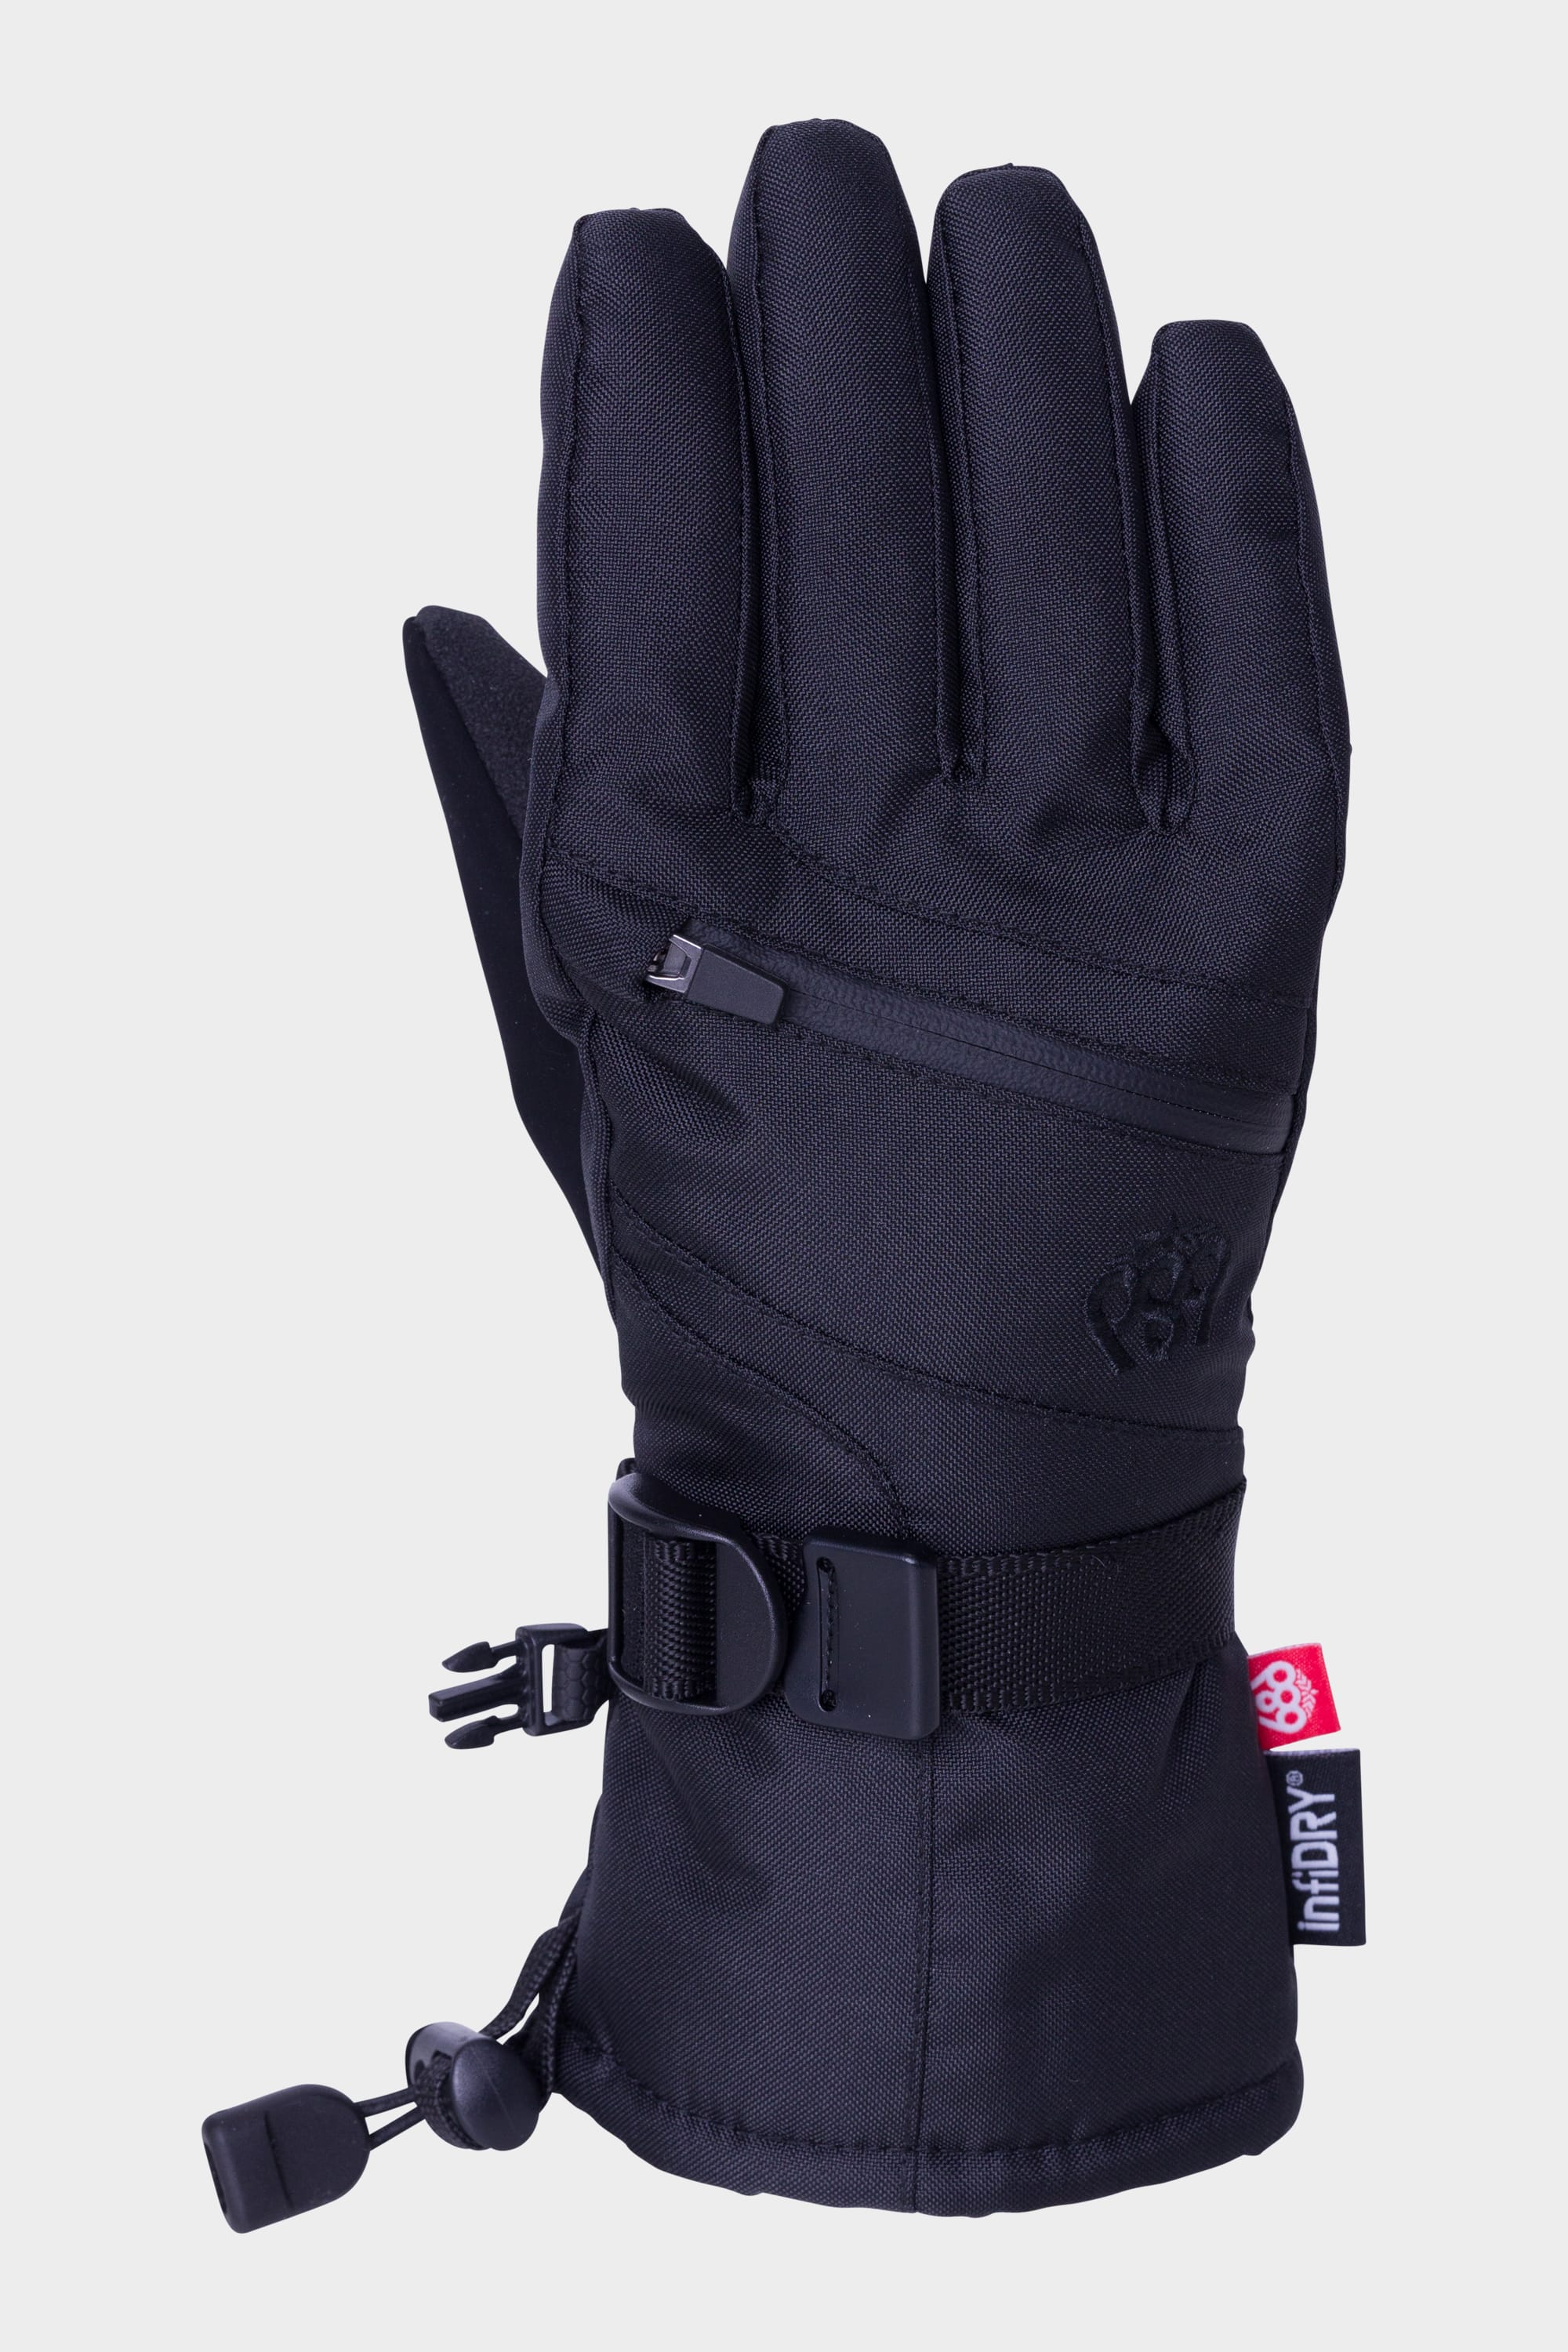 686 Youth Heat Glove - Dusty Mauve / M